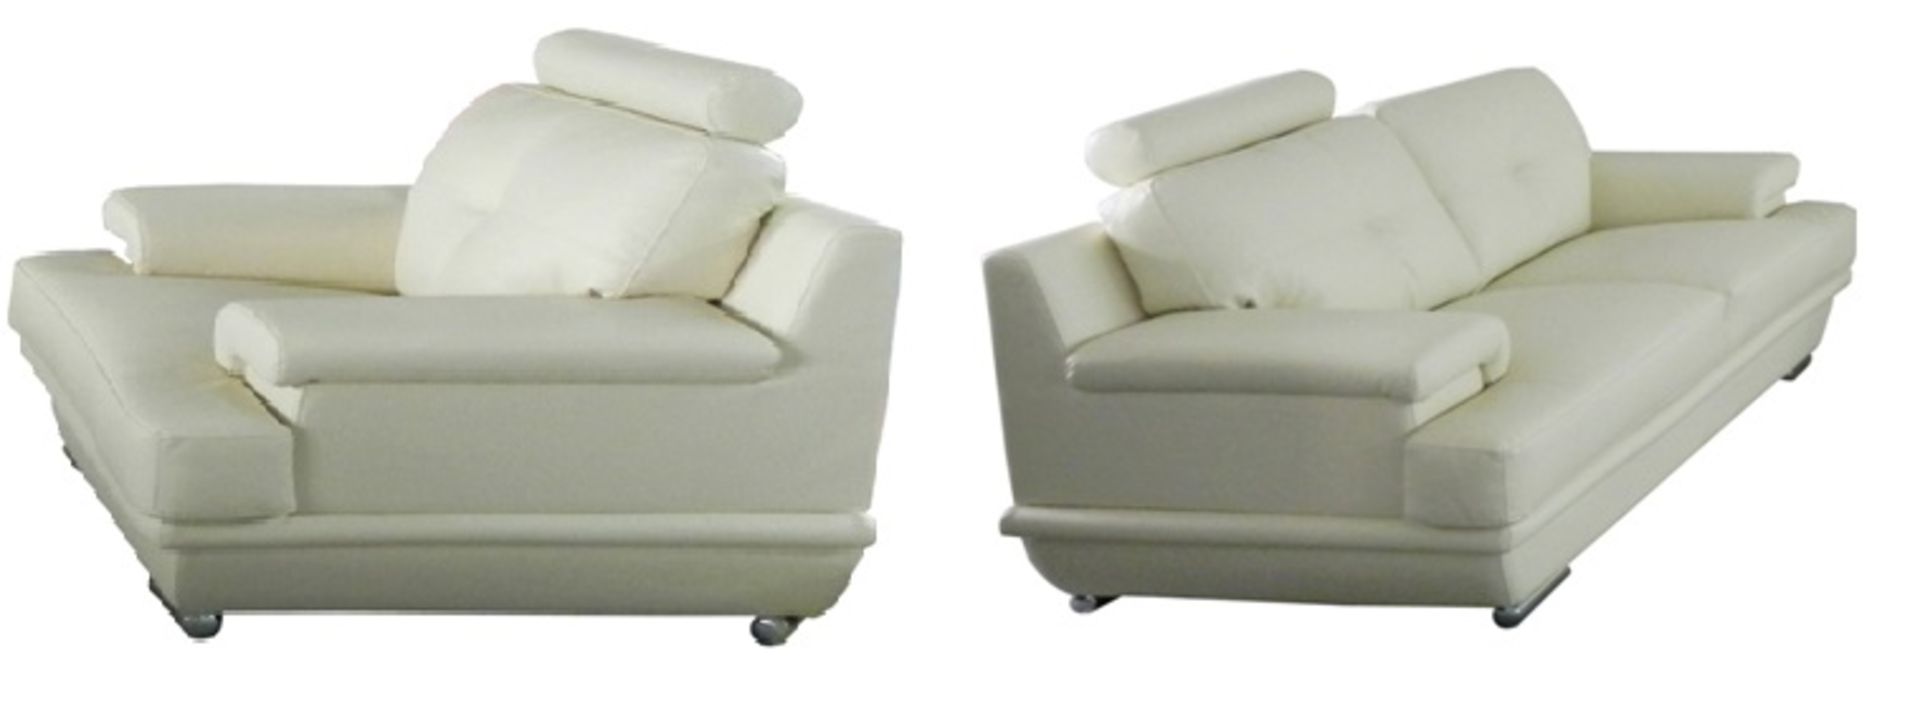 1 x Cream Bonded Leather Sofa 3 Seater - SFS006 (Brand New)